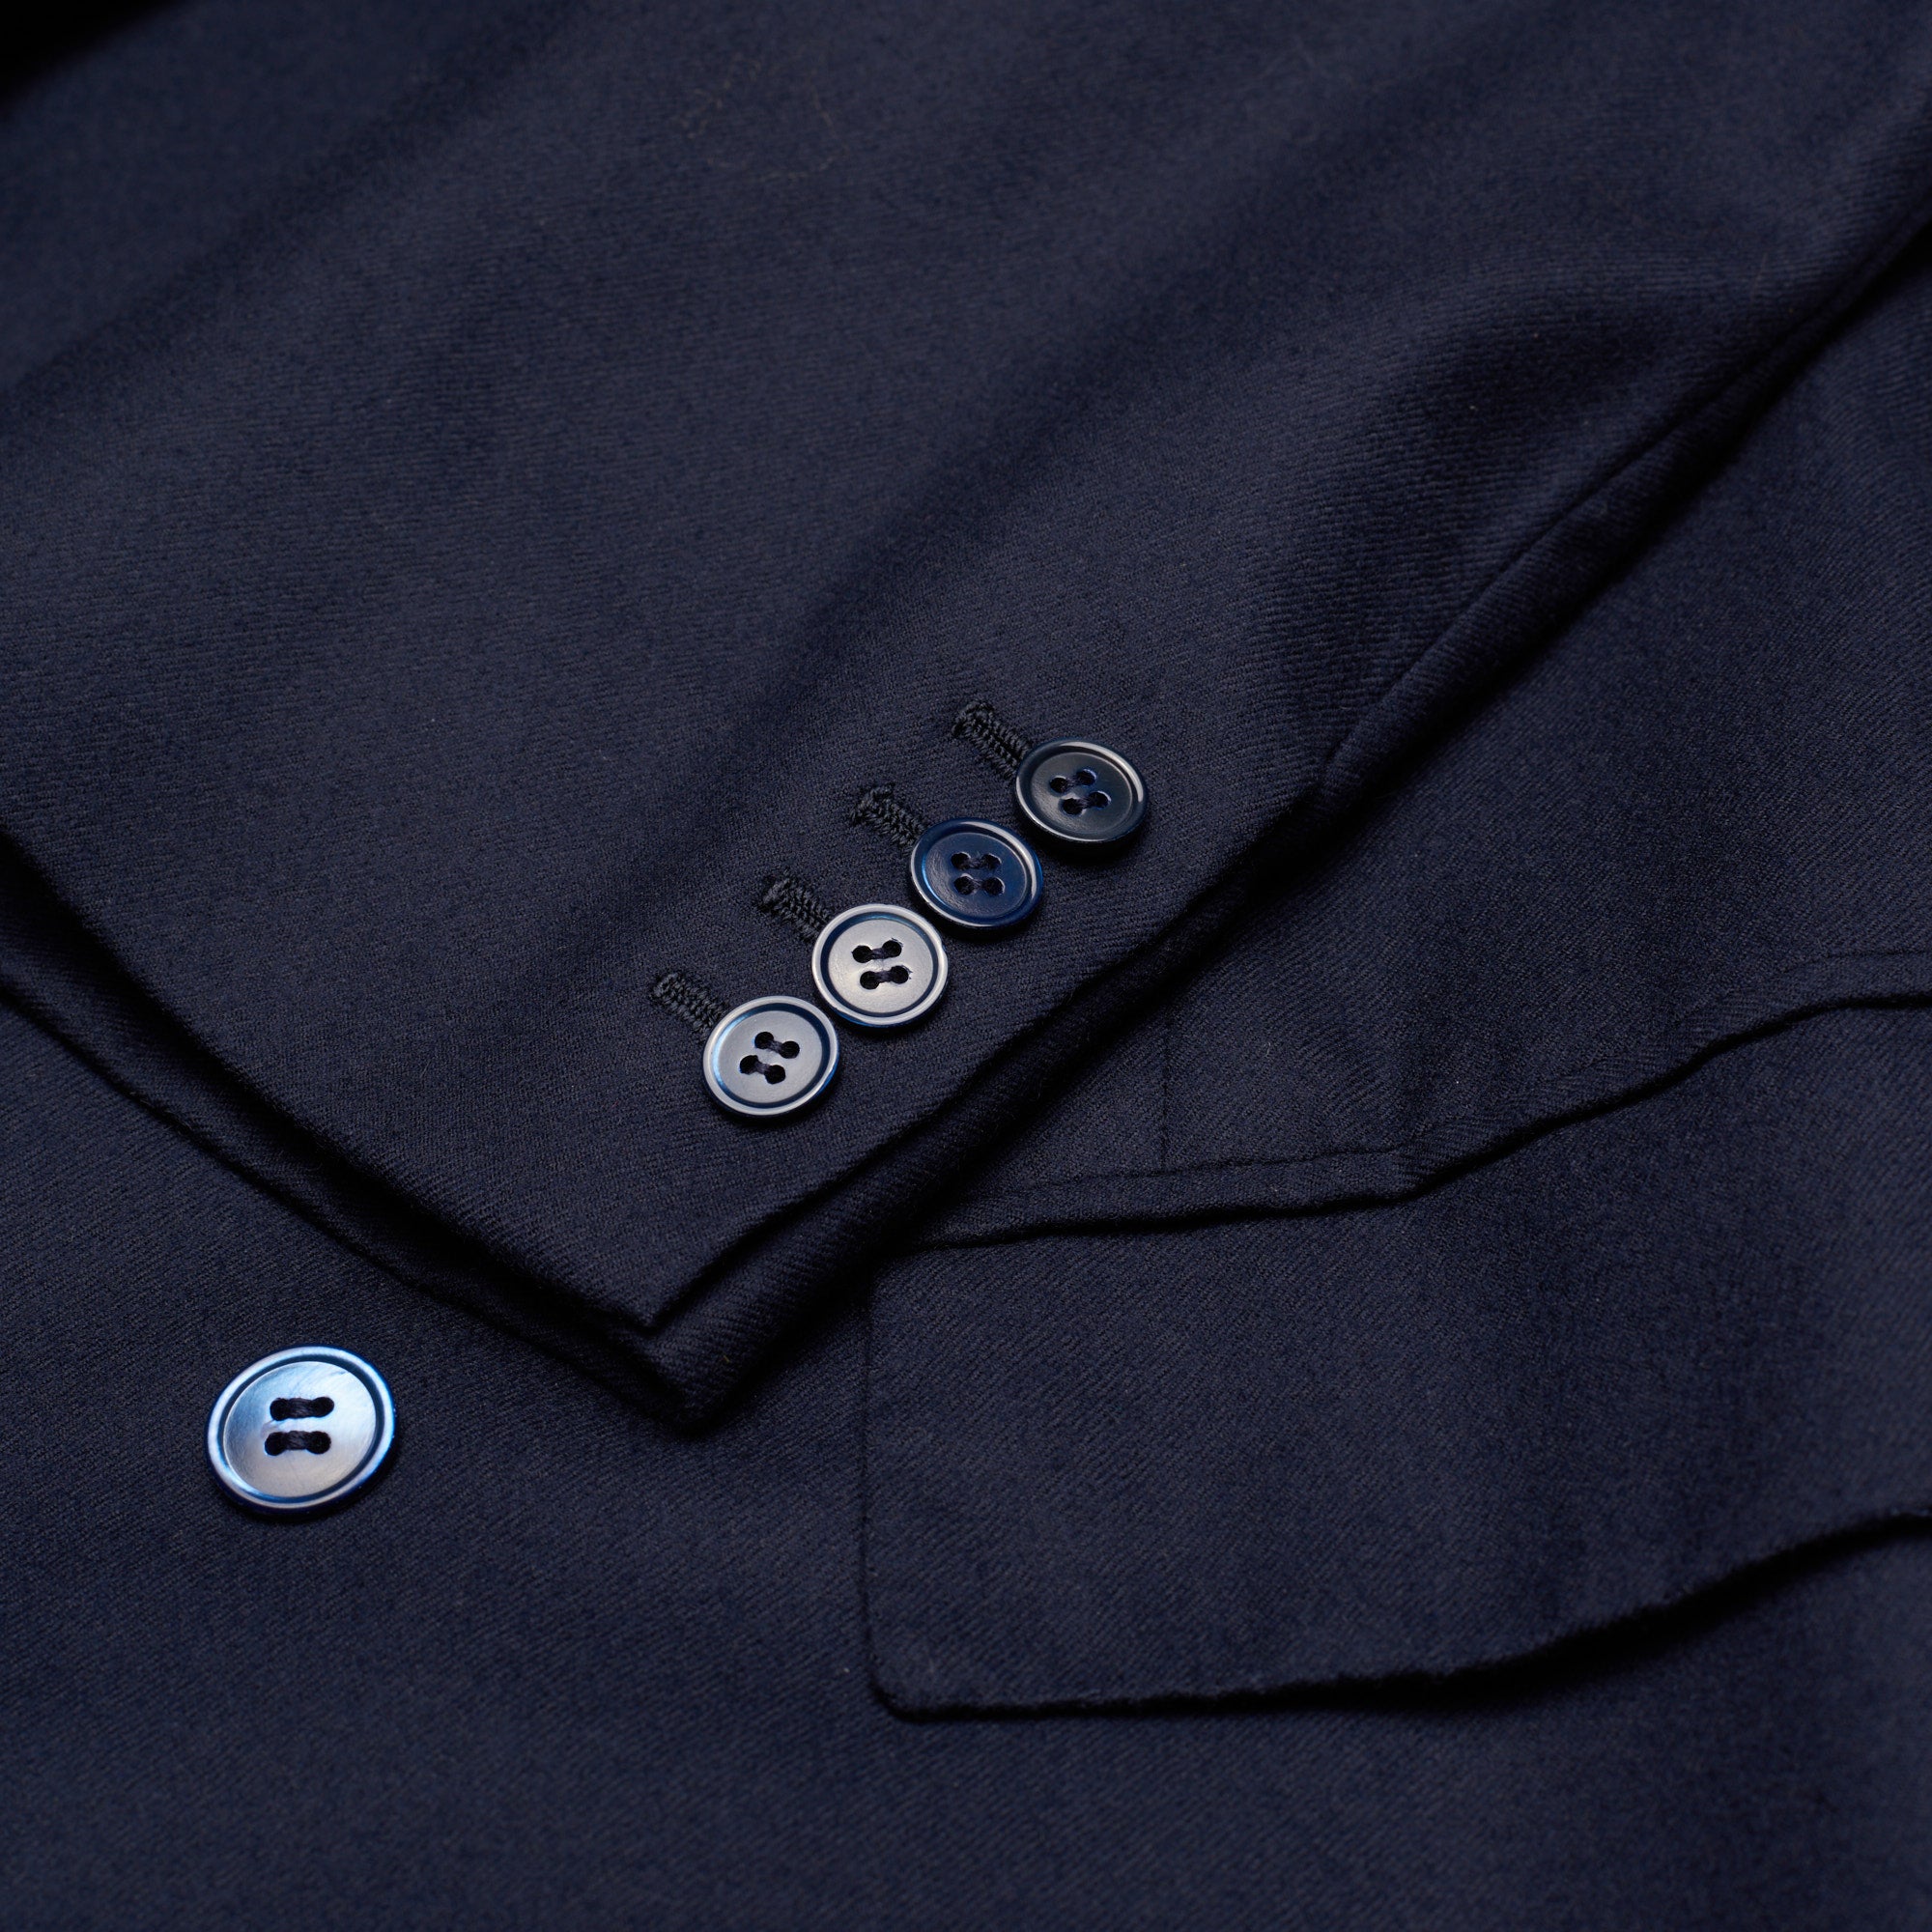 FALLAN & HARVEY LTD. Savile Row Bespoke Blazer Blue Wool DB Jacket US 42